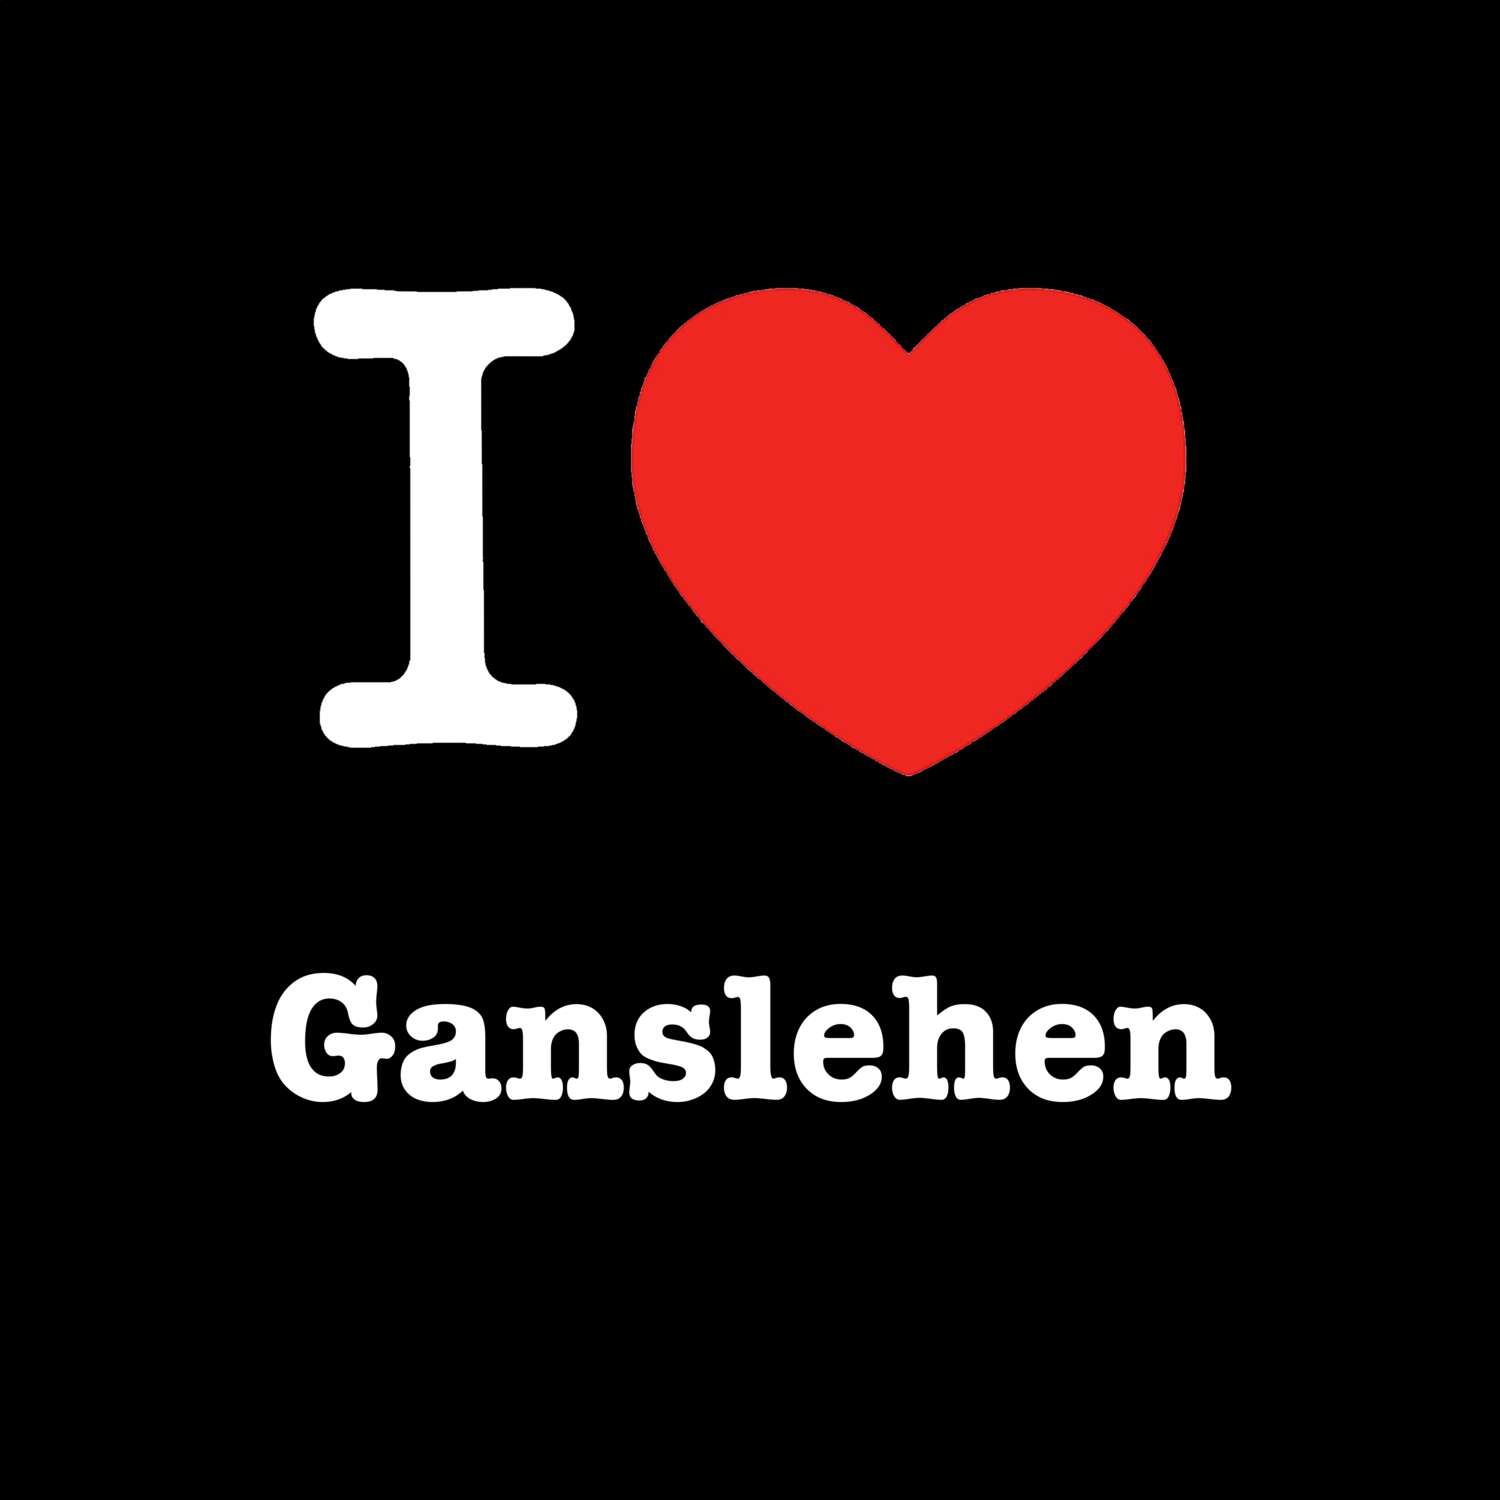 Ganslehen T-Shirt »I love«